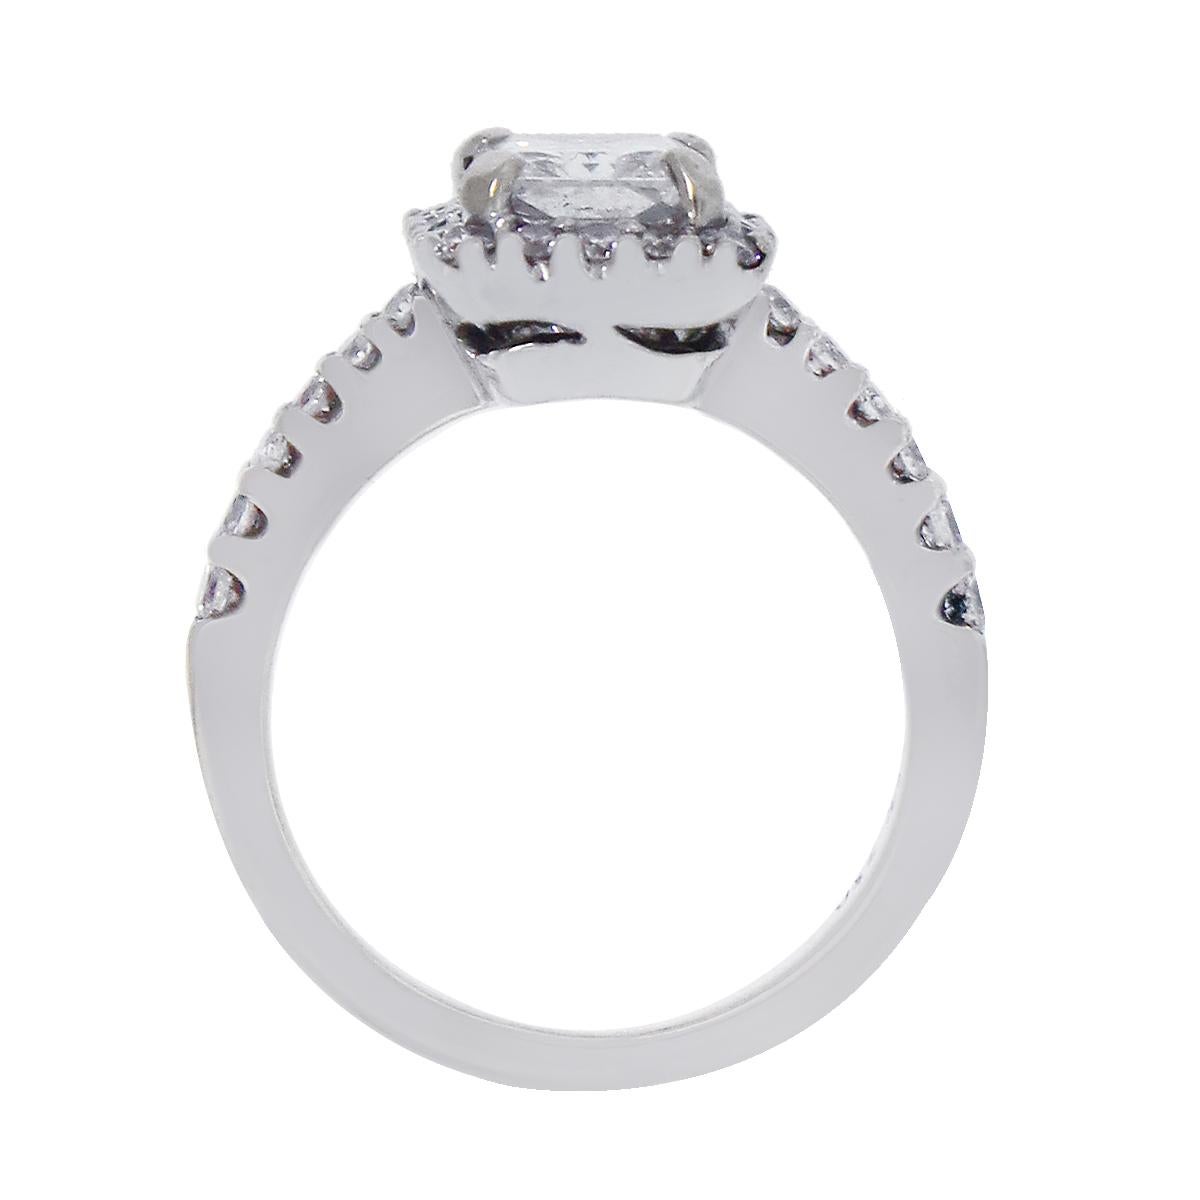 Radiant Cut 1.11 Carat GIA Certified Diamond Engagement Ring